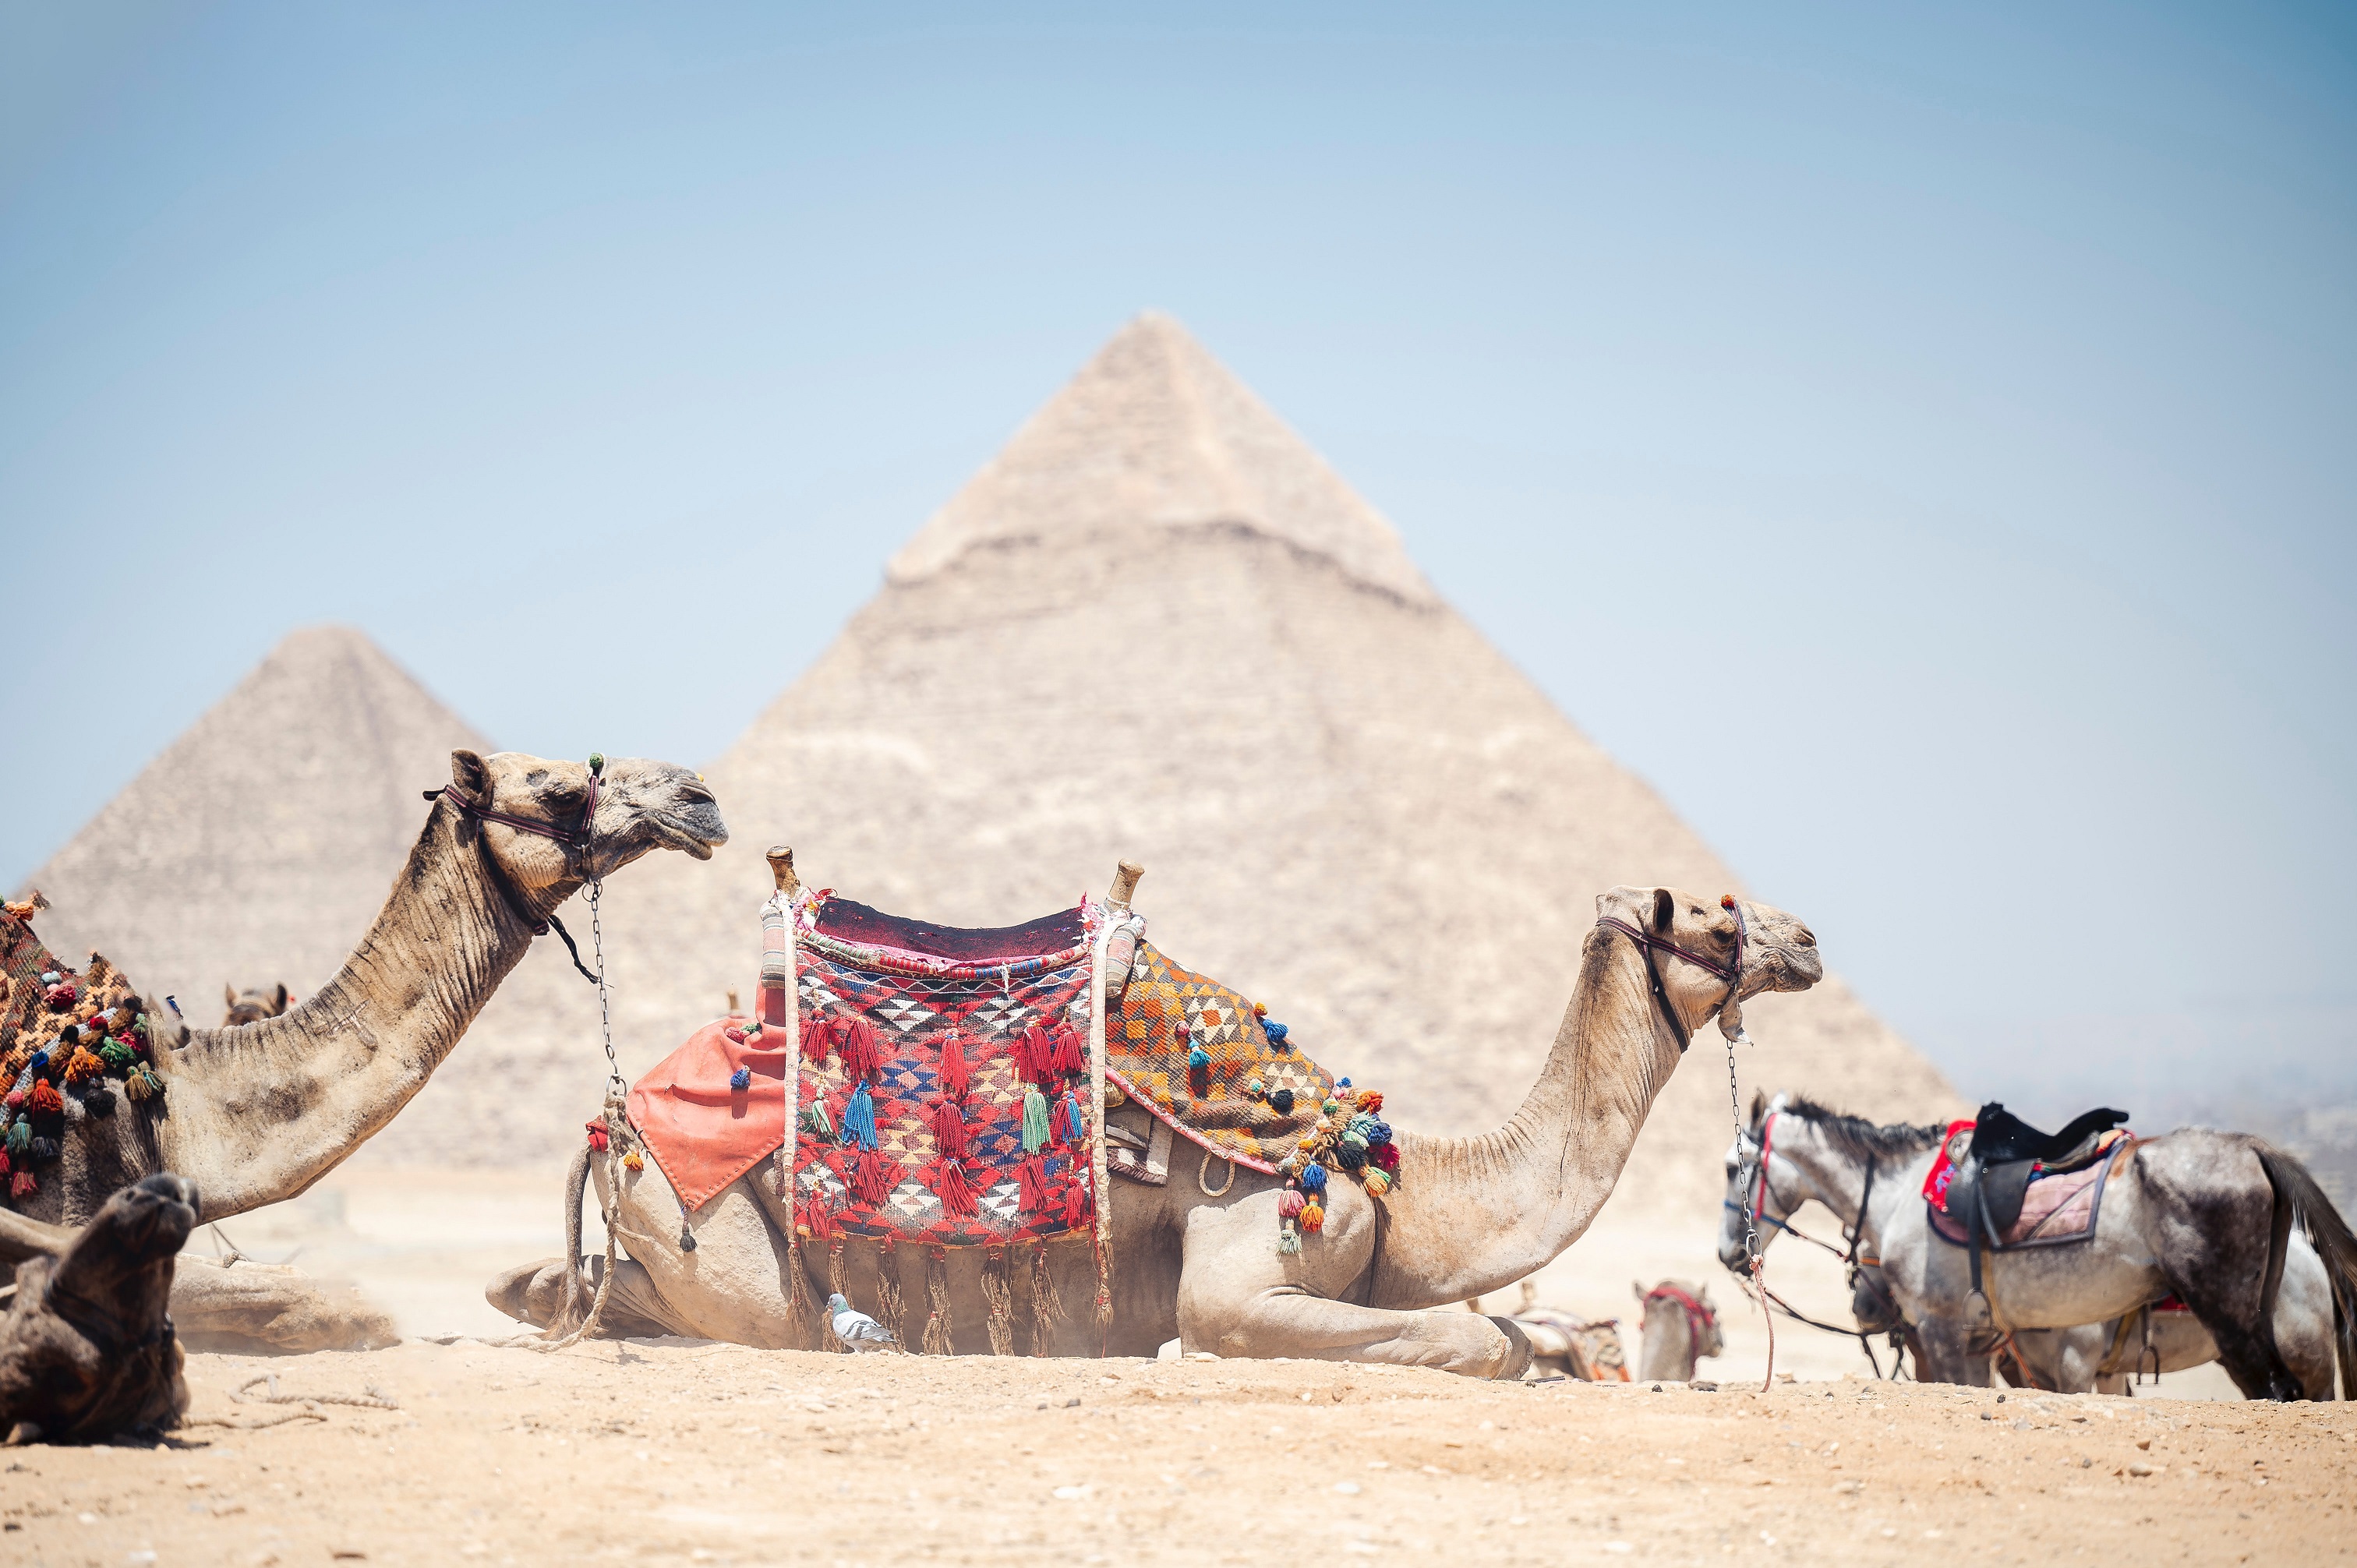 Pyramids to Skyscrapers: Egypt and Dubai Tour